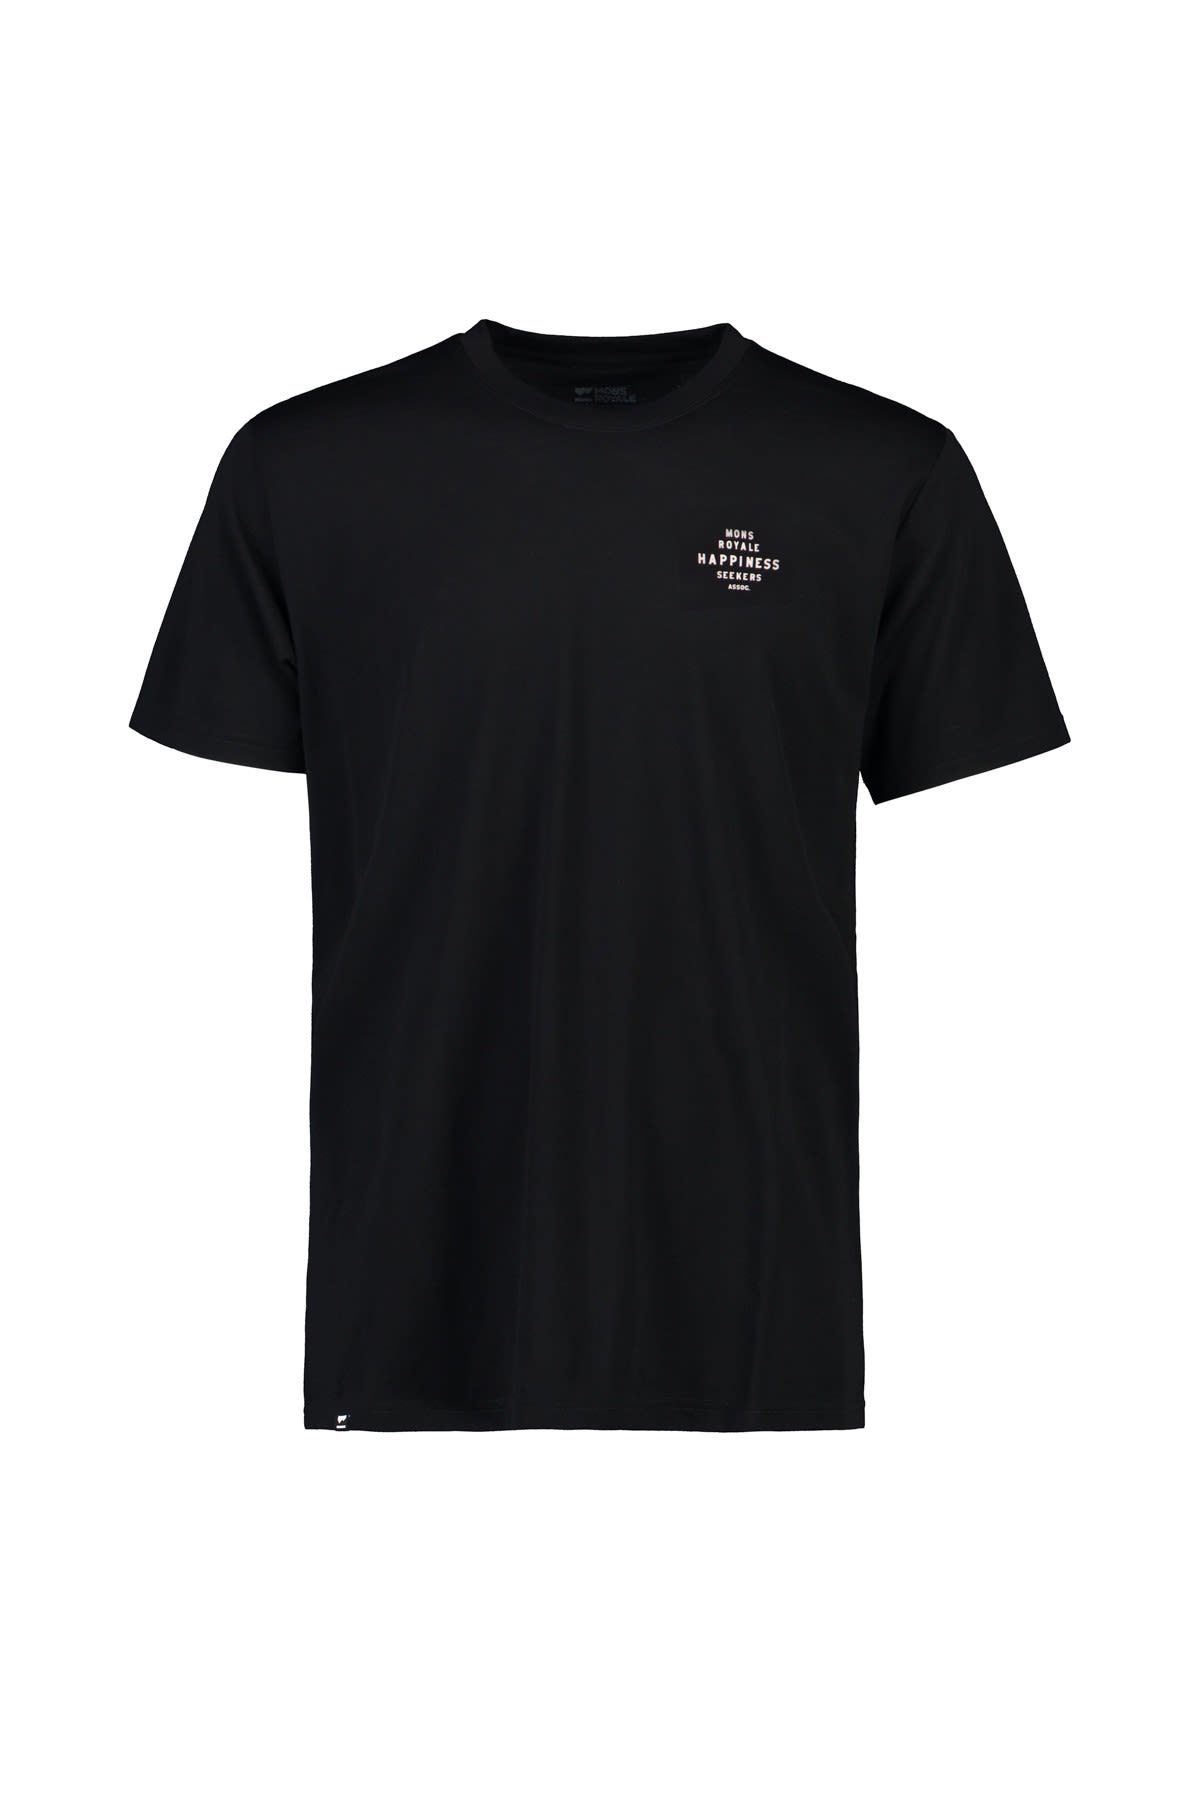 Mons Royale T-Shirt Mons Royale M Icon T-shirt Herren Kurzarm-Shirt Black - Happiness Seekers